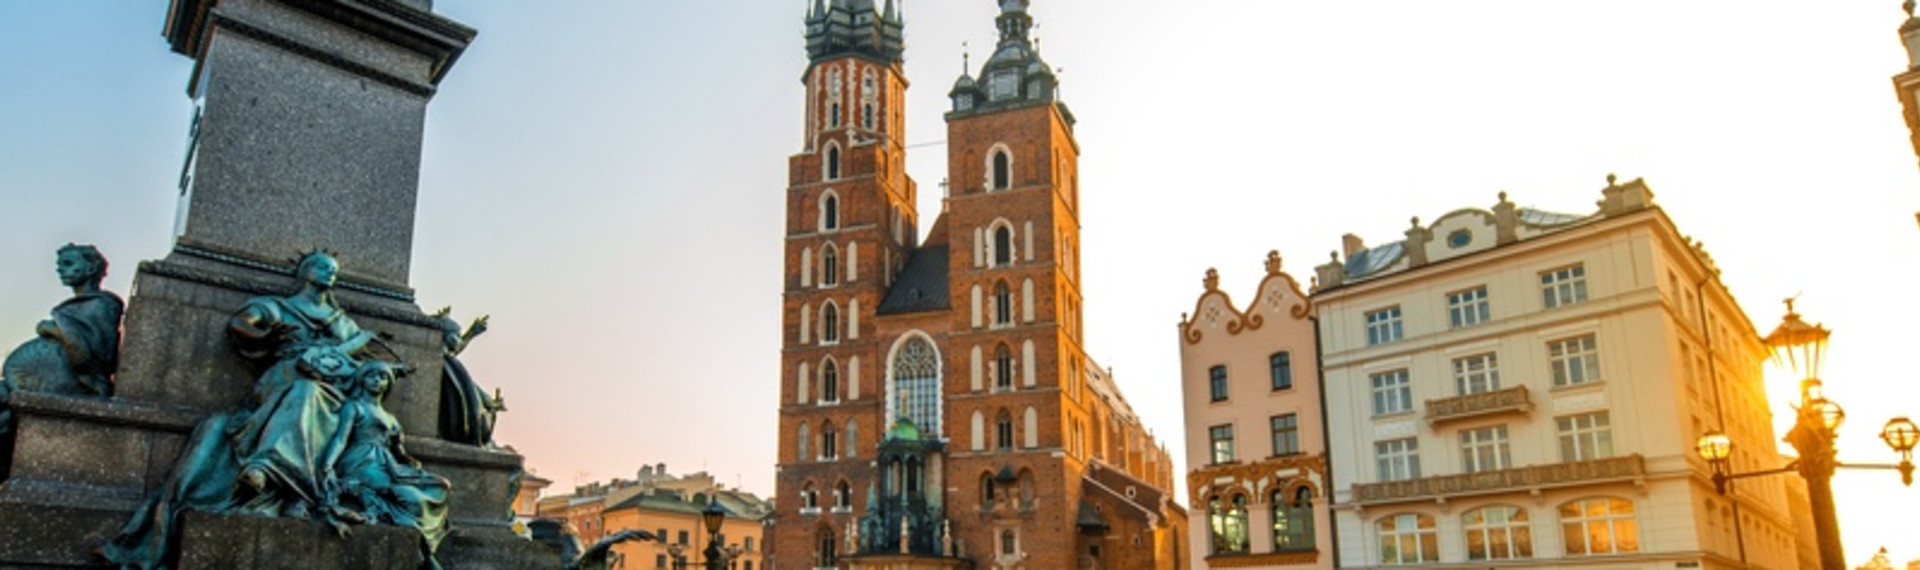 Sightbeering Tour Krakow | Pissup